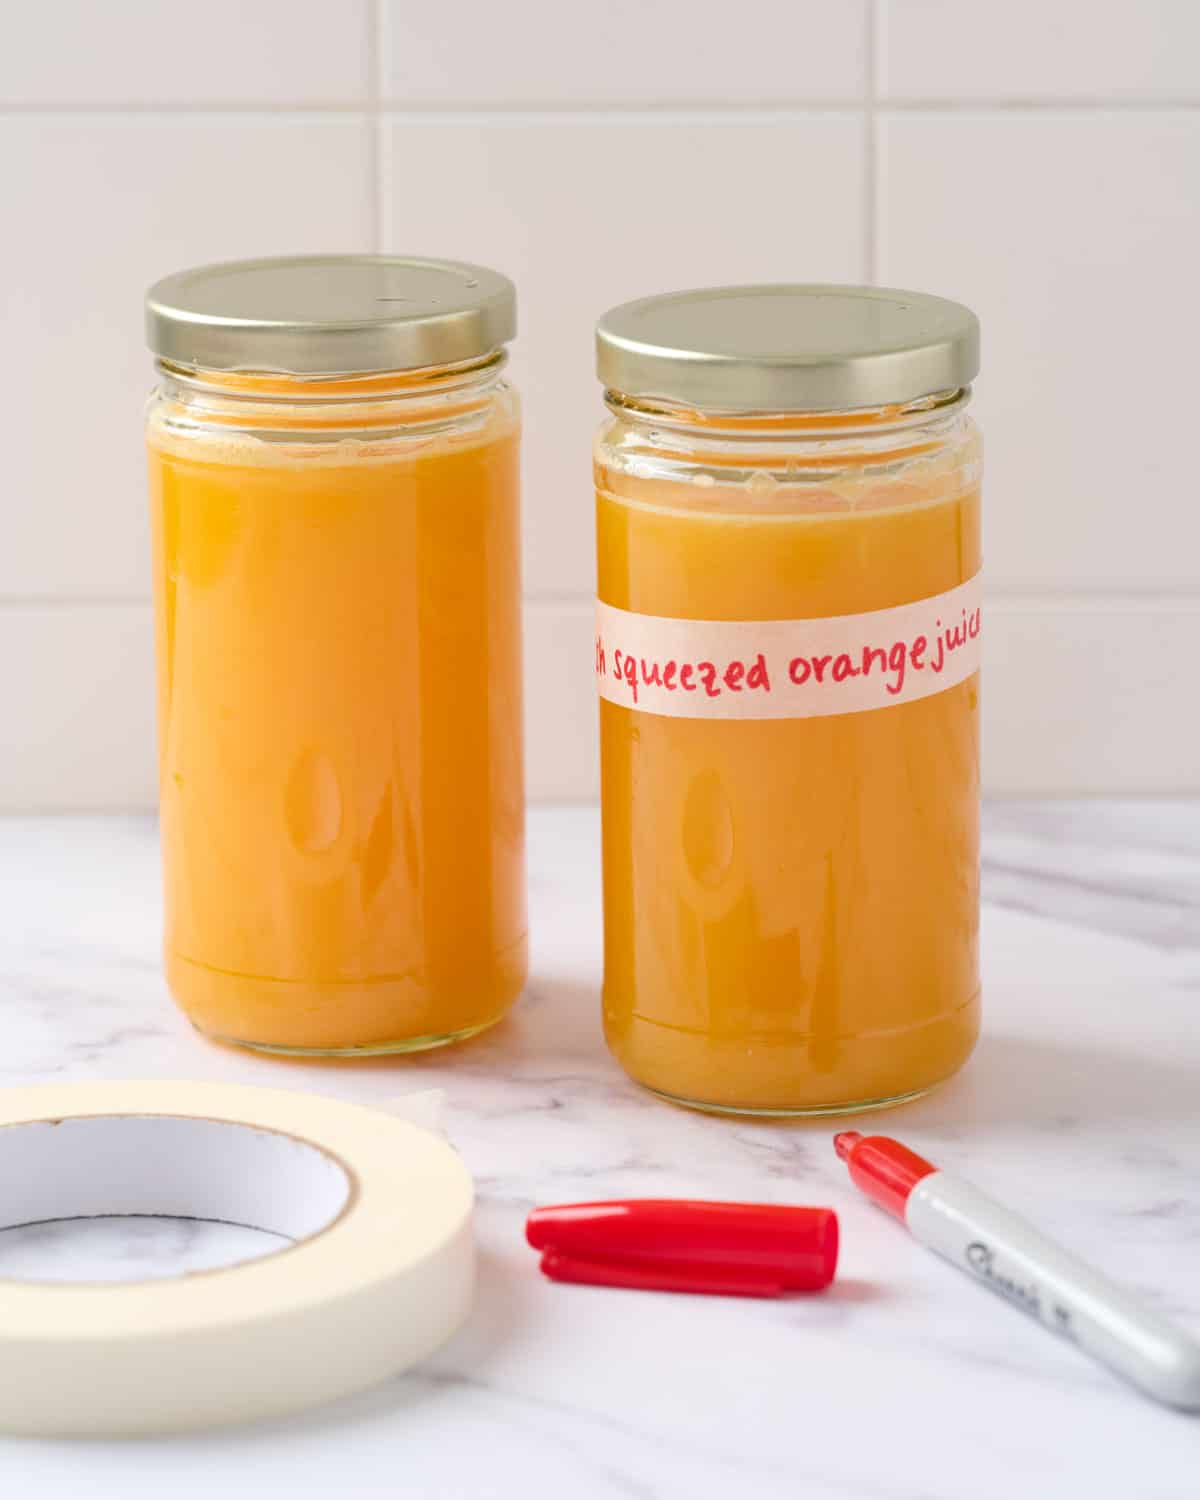 freshly squeezed orange juice stored in glass jars